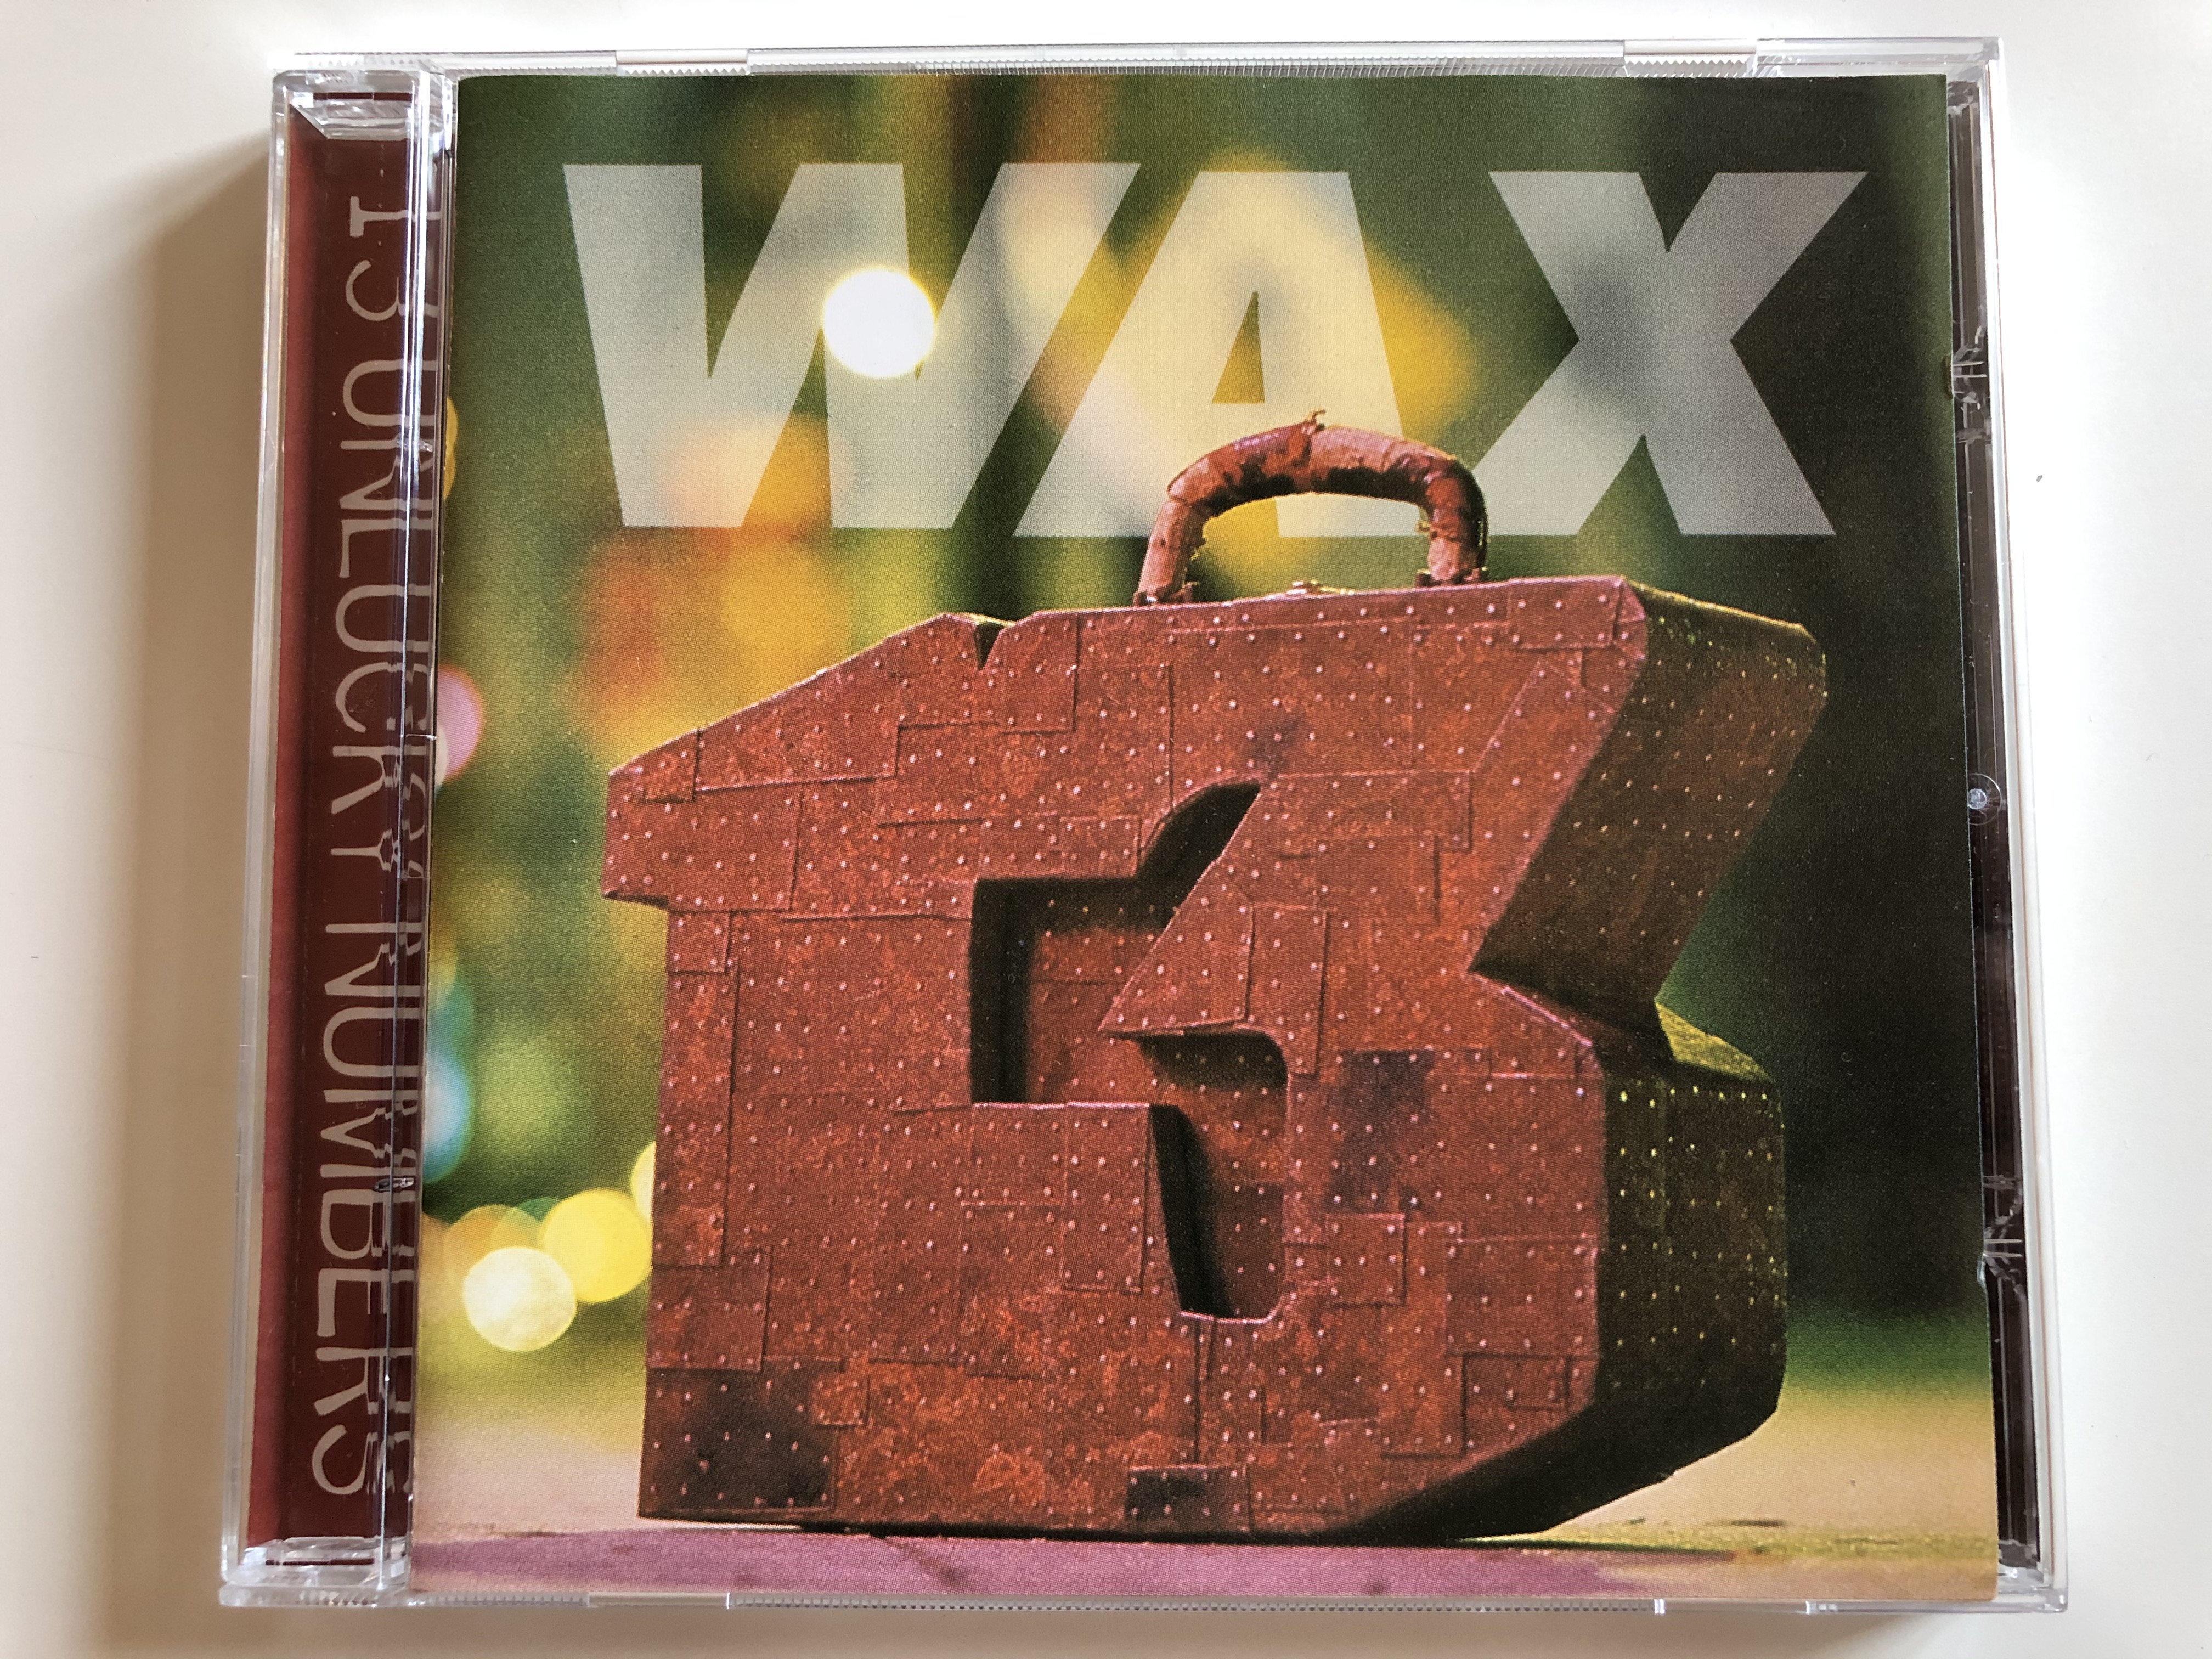 wax-13-unlucky-numbers-interscope-records-audio-cd-1995-6544-92544-2-1-.jpg